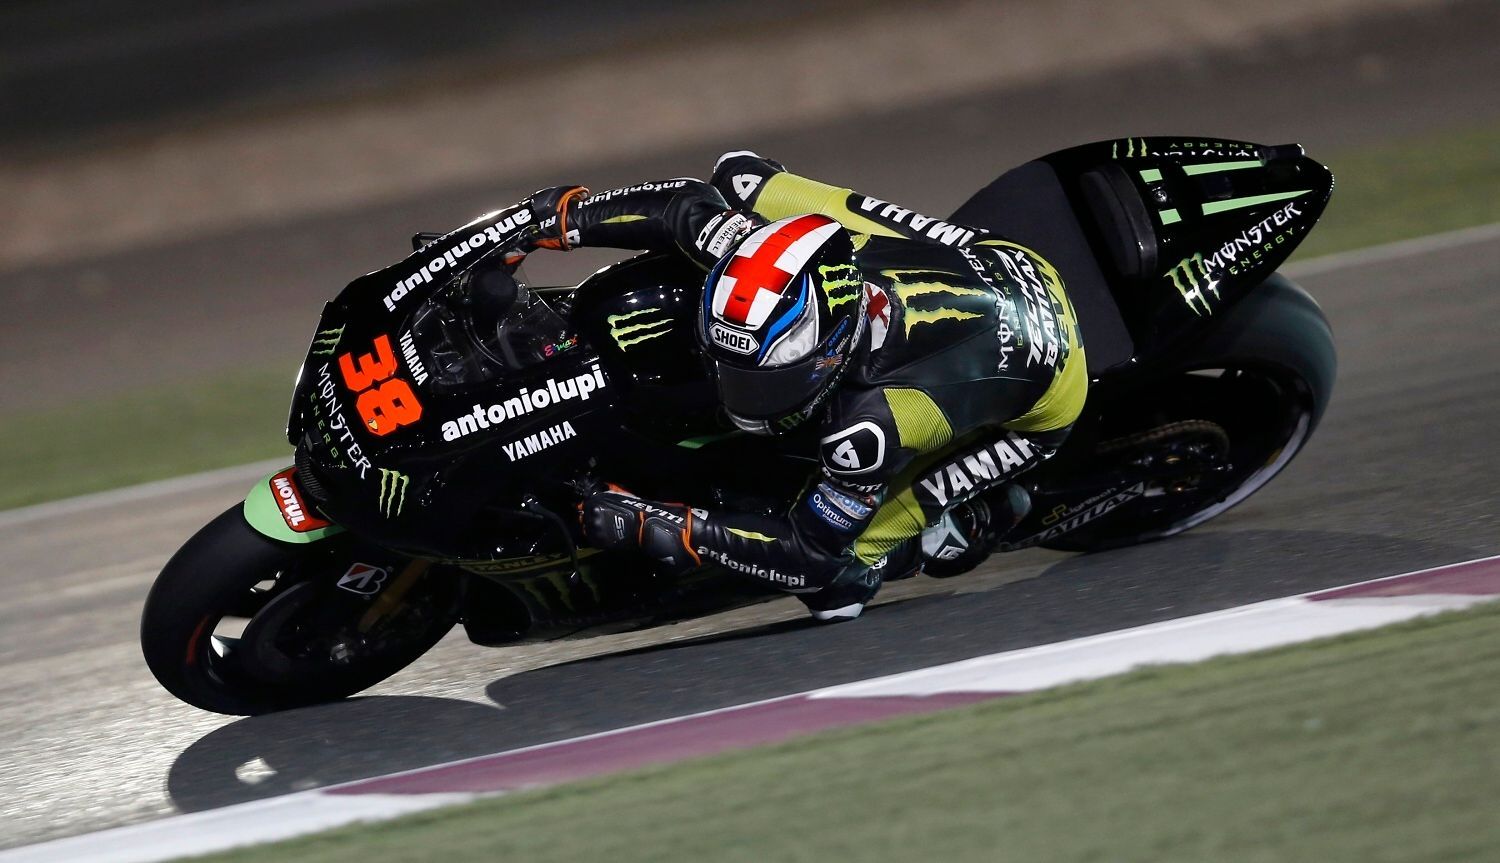 MotoGP, GP Kataru:  Bradley Smith, Yamaha